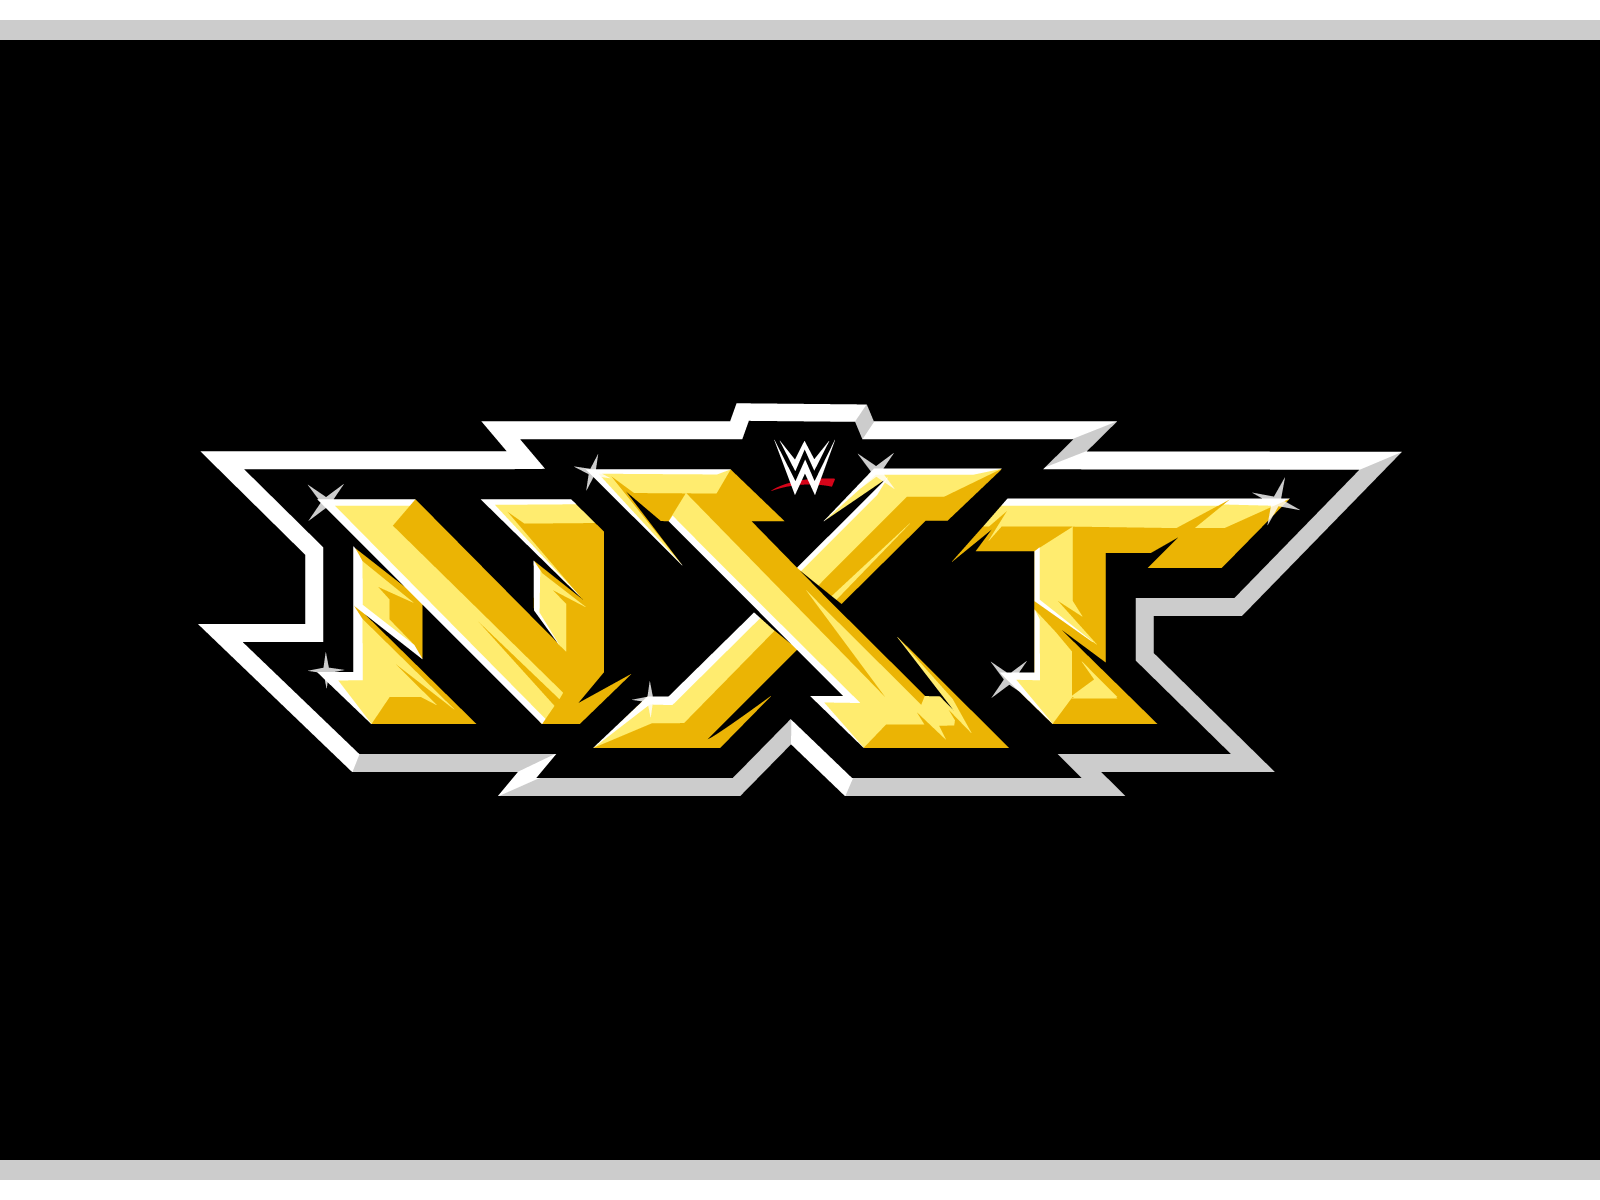 WWE NXT LOGO by Alphabet Agency on Dribbble